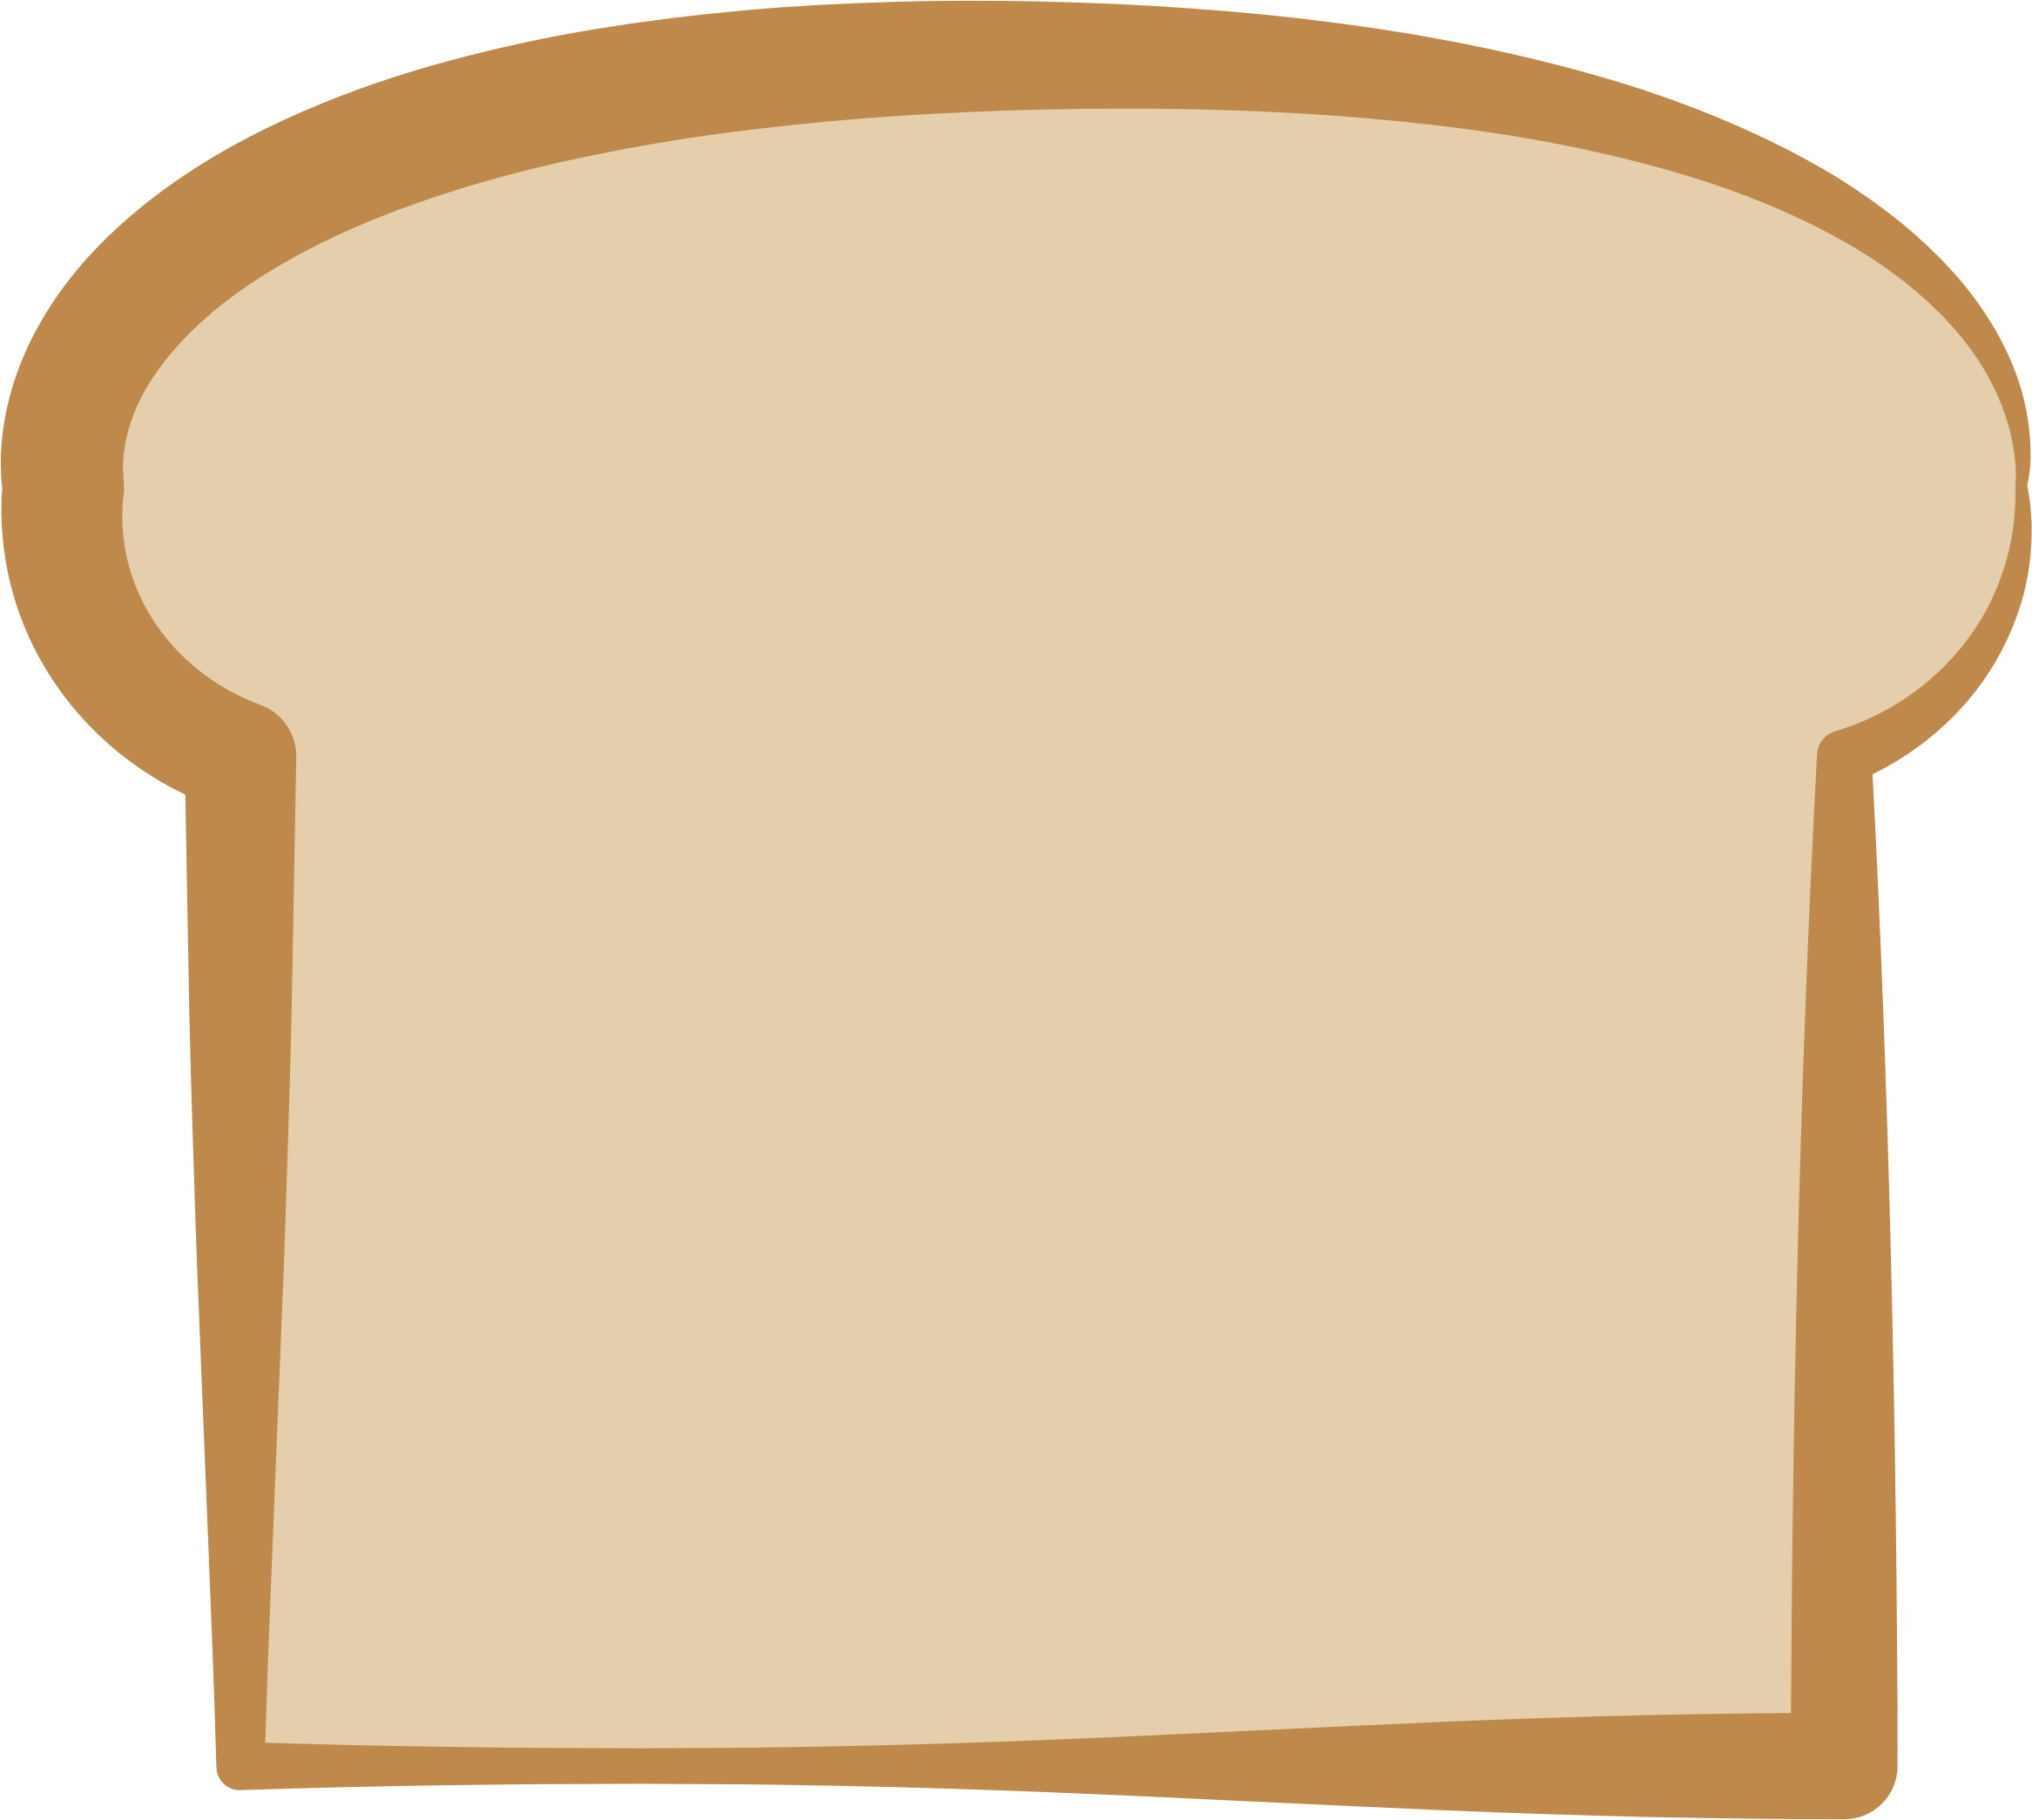 Toast Clipart Slice Bread Bread Slice Clip Art Image Provided 